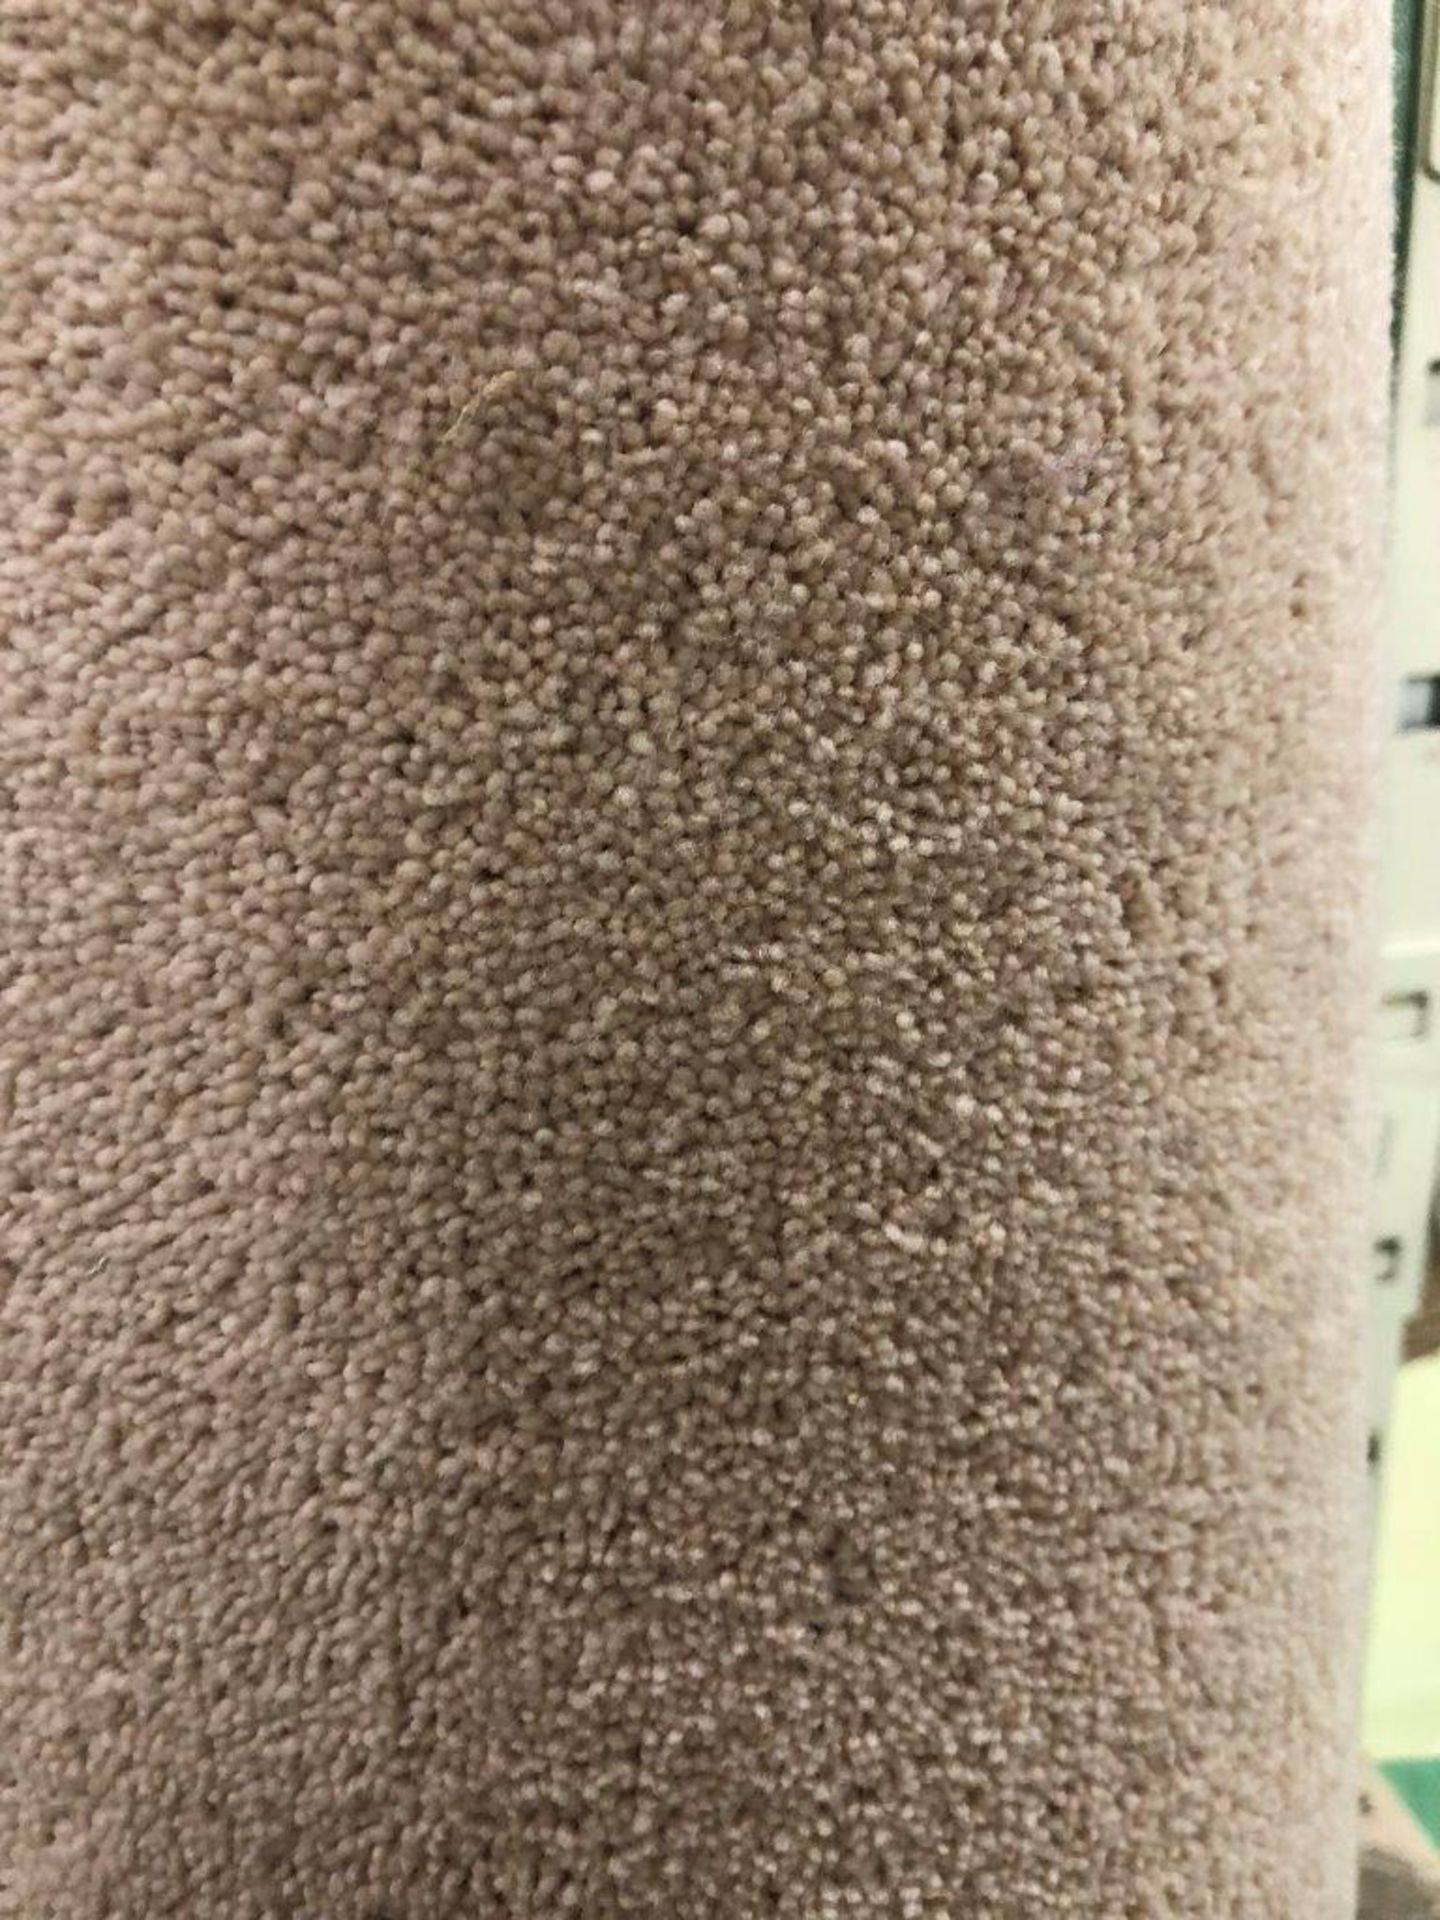 1 x Ryalux Carpet End Roll - Cream 5.0x2.1m2 - Image 3 of 3